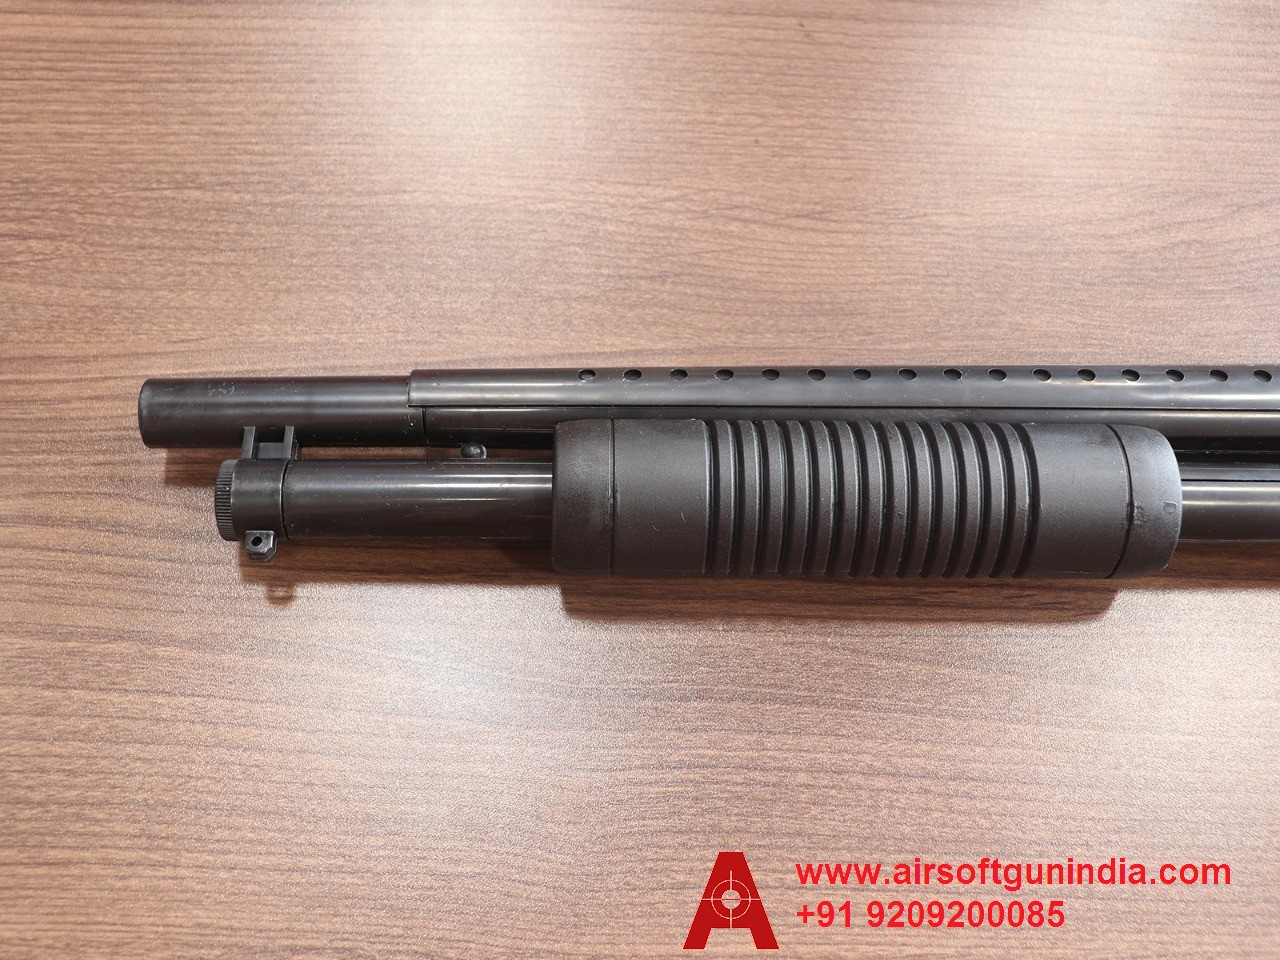 Pump Action Shot-Gun Black Edition Airsoft Toy By Airsoft Gun India